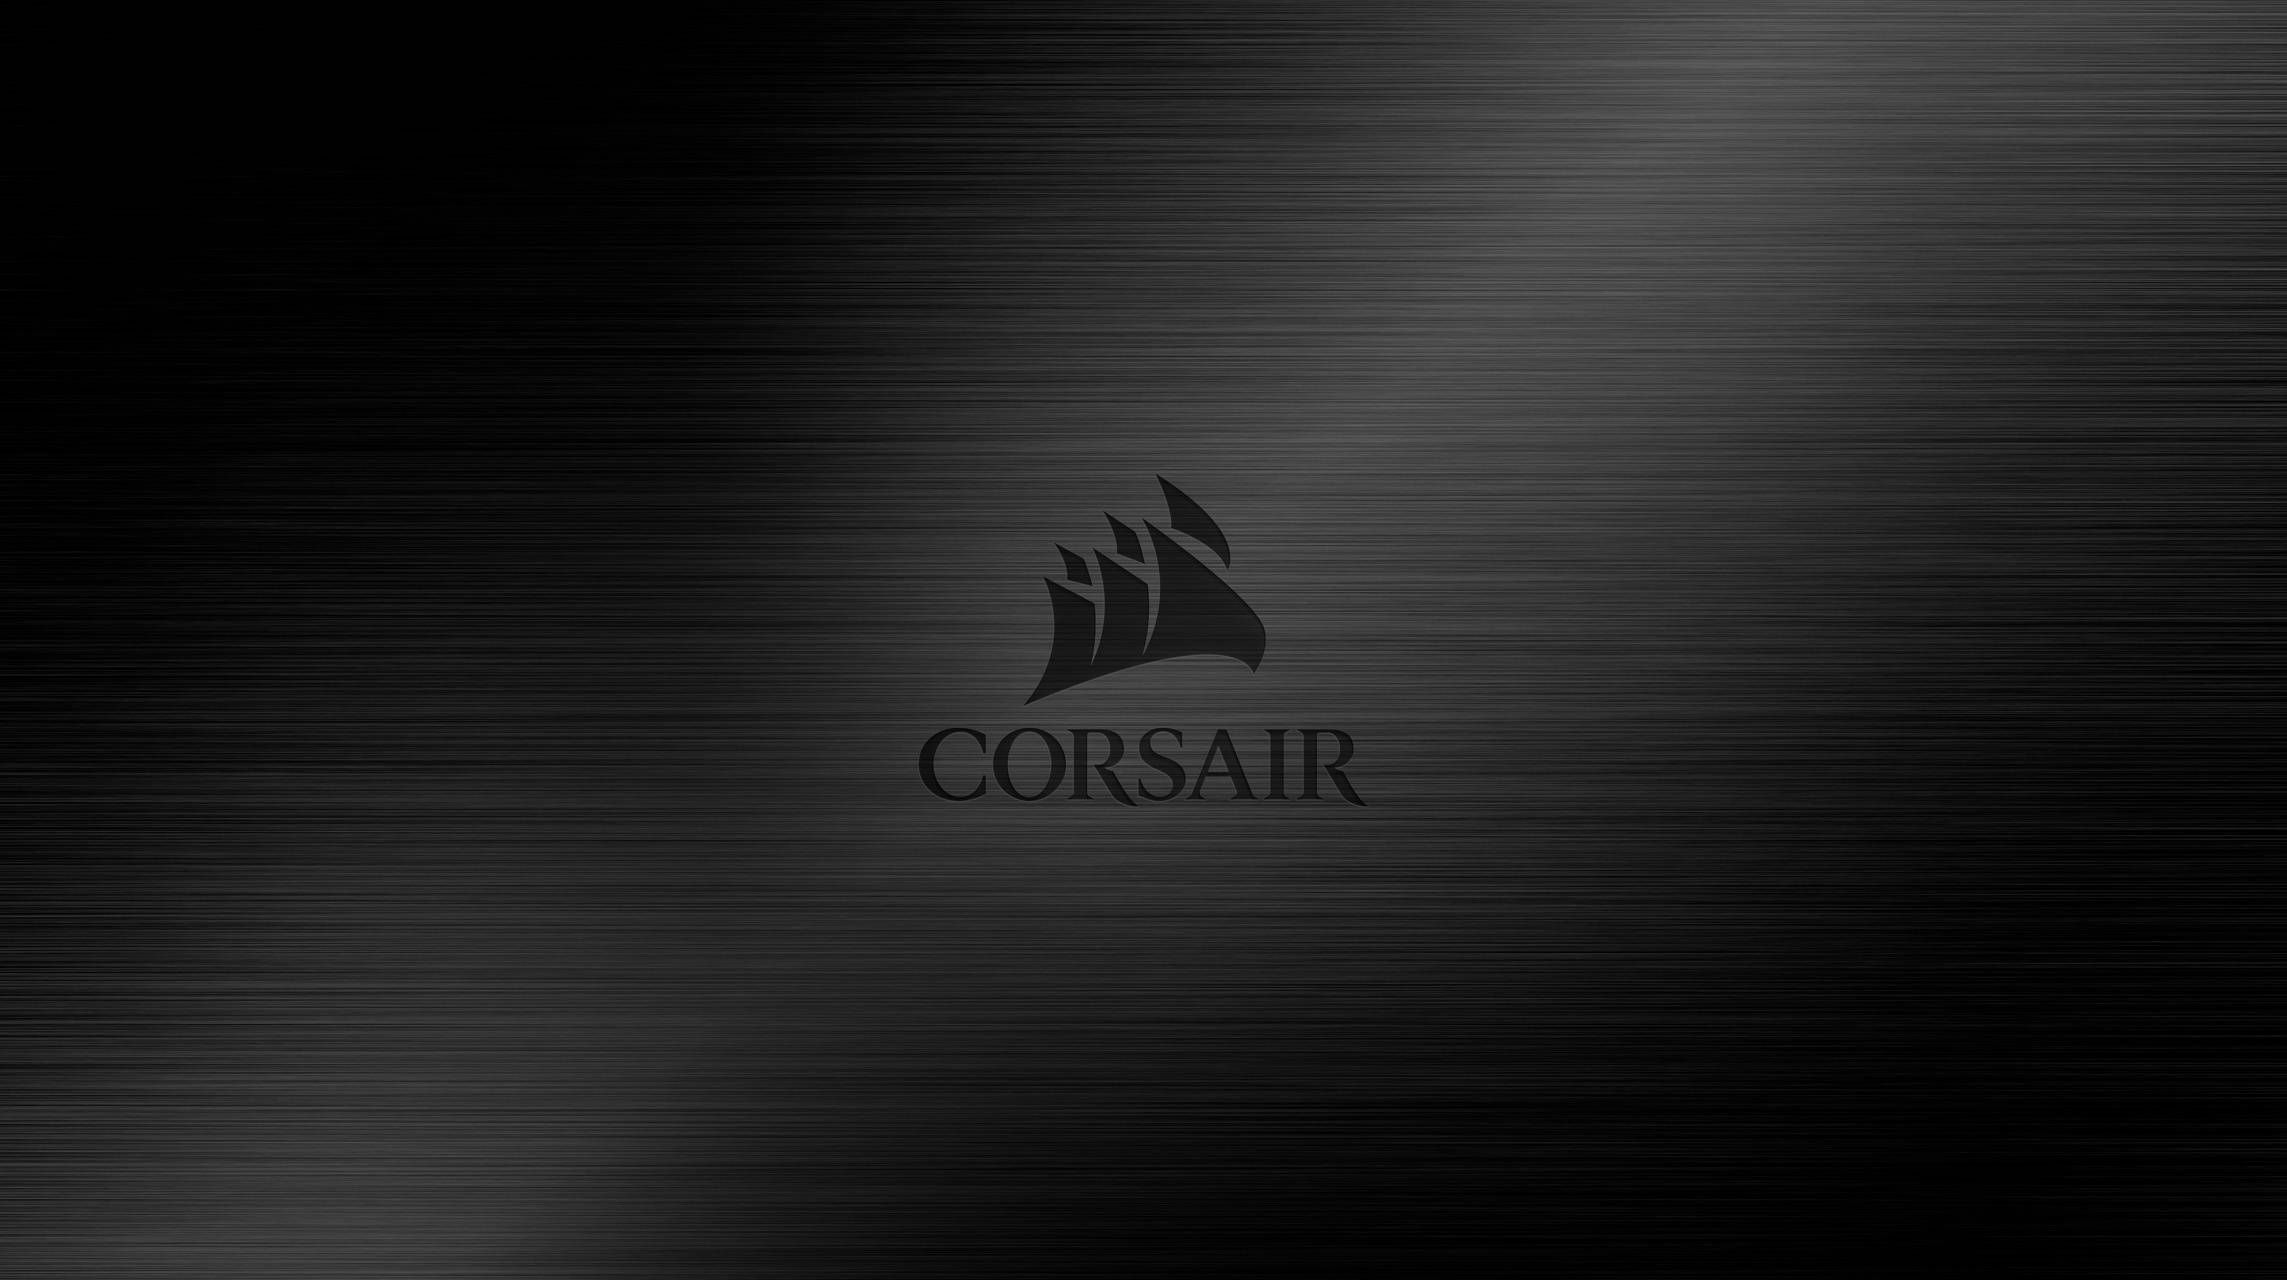 Corsair Desktop Wallpapers - Wallpaper Cave